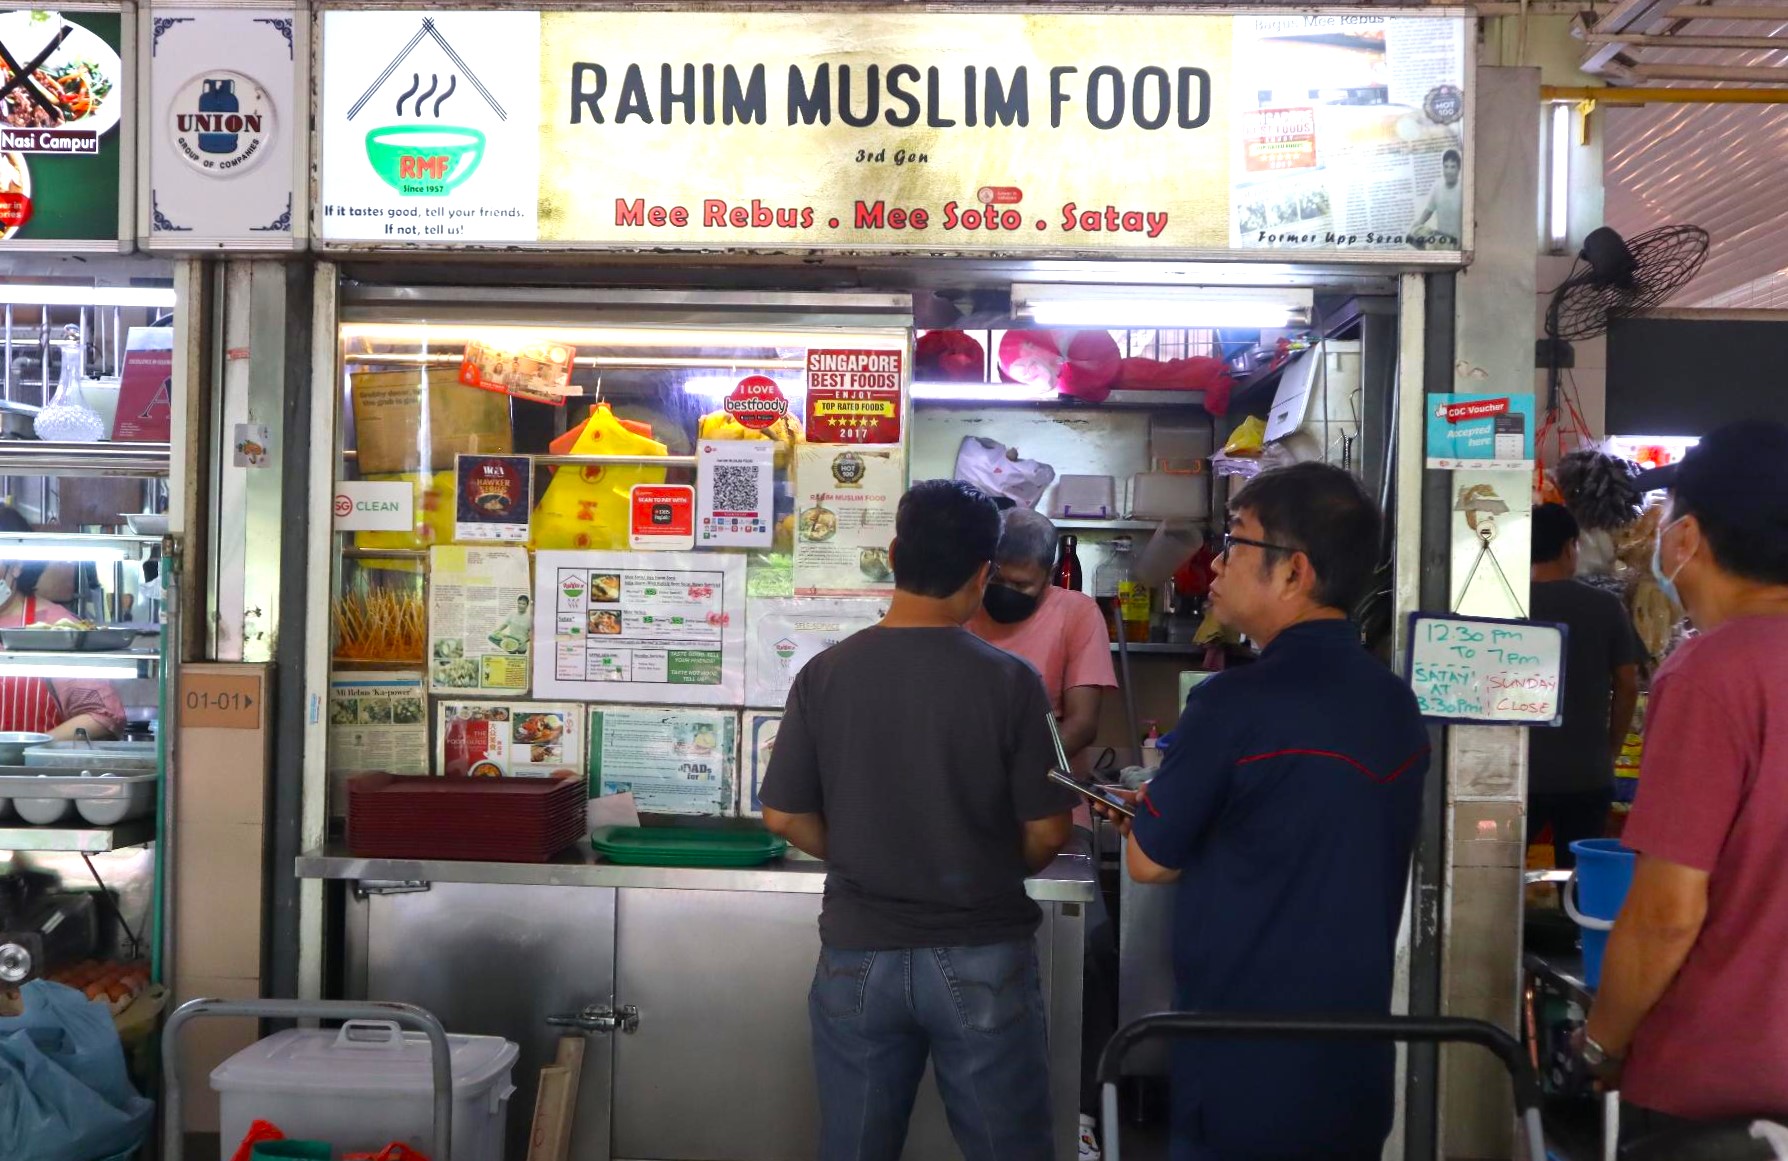 Chong boon market - rahim muslim food